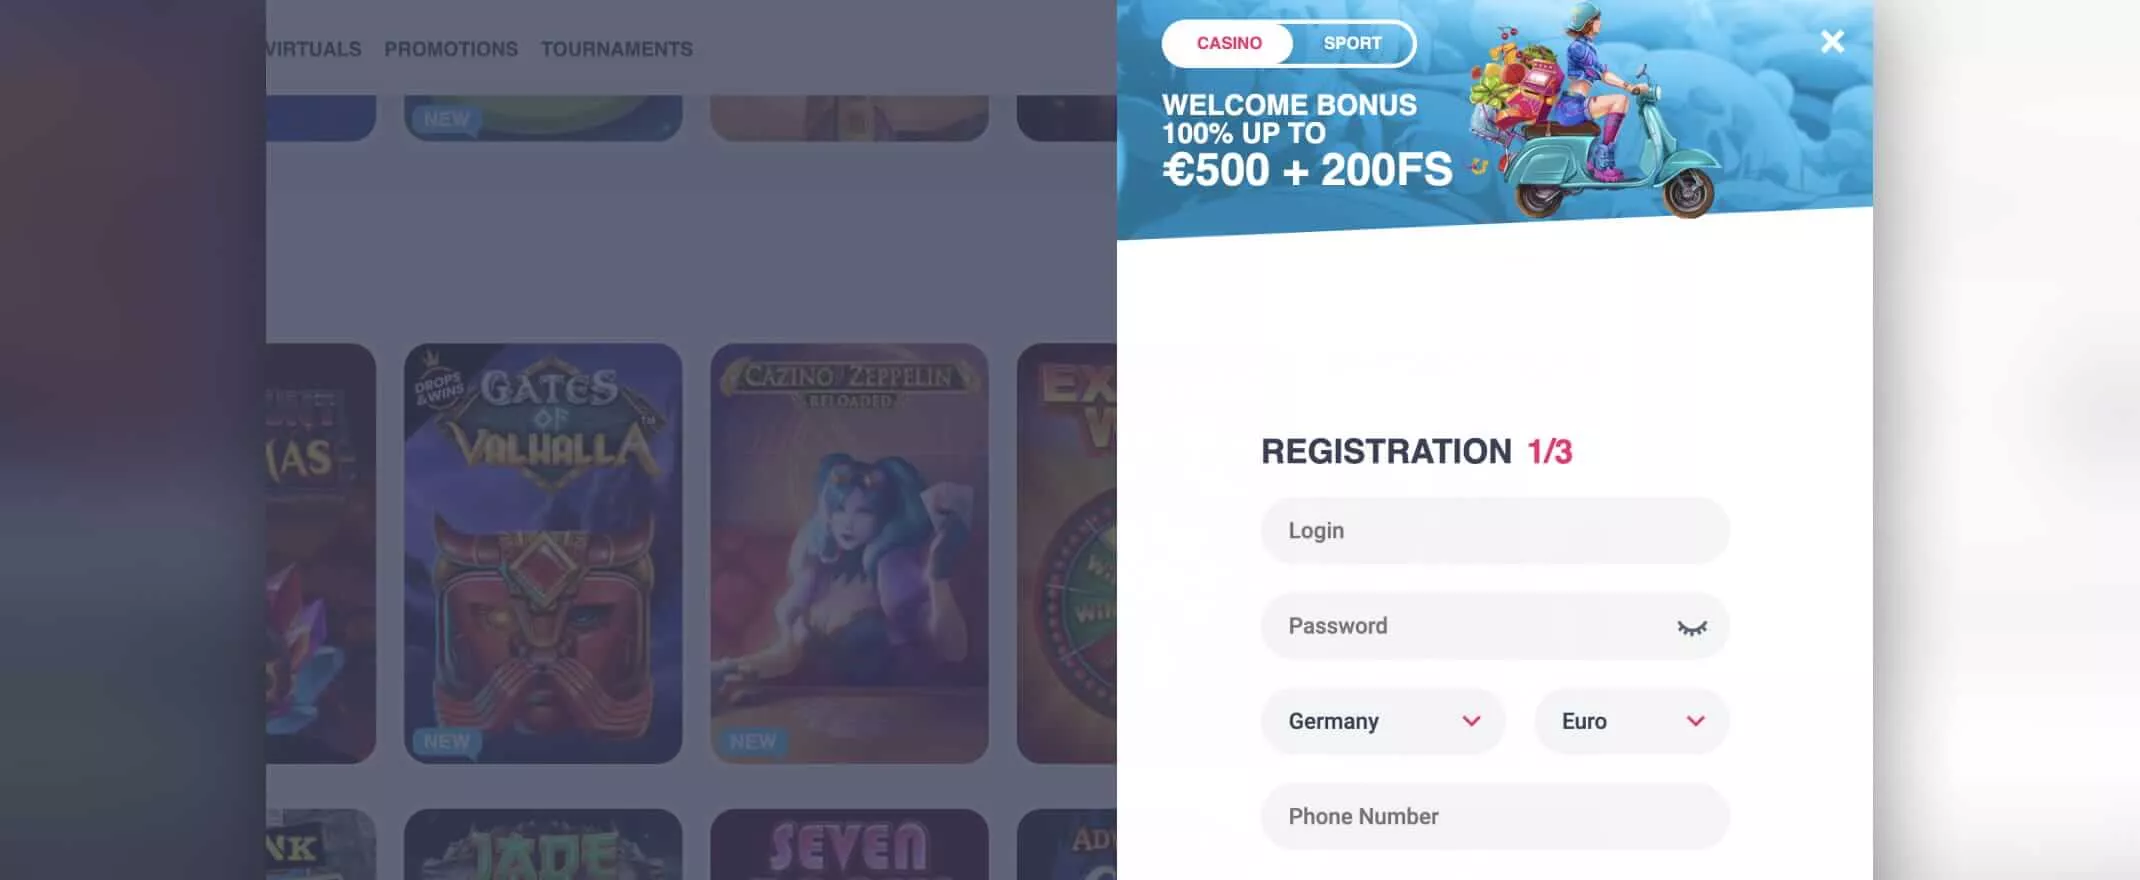 ohmyspins screenshot of registration